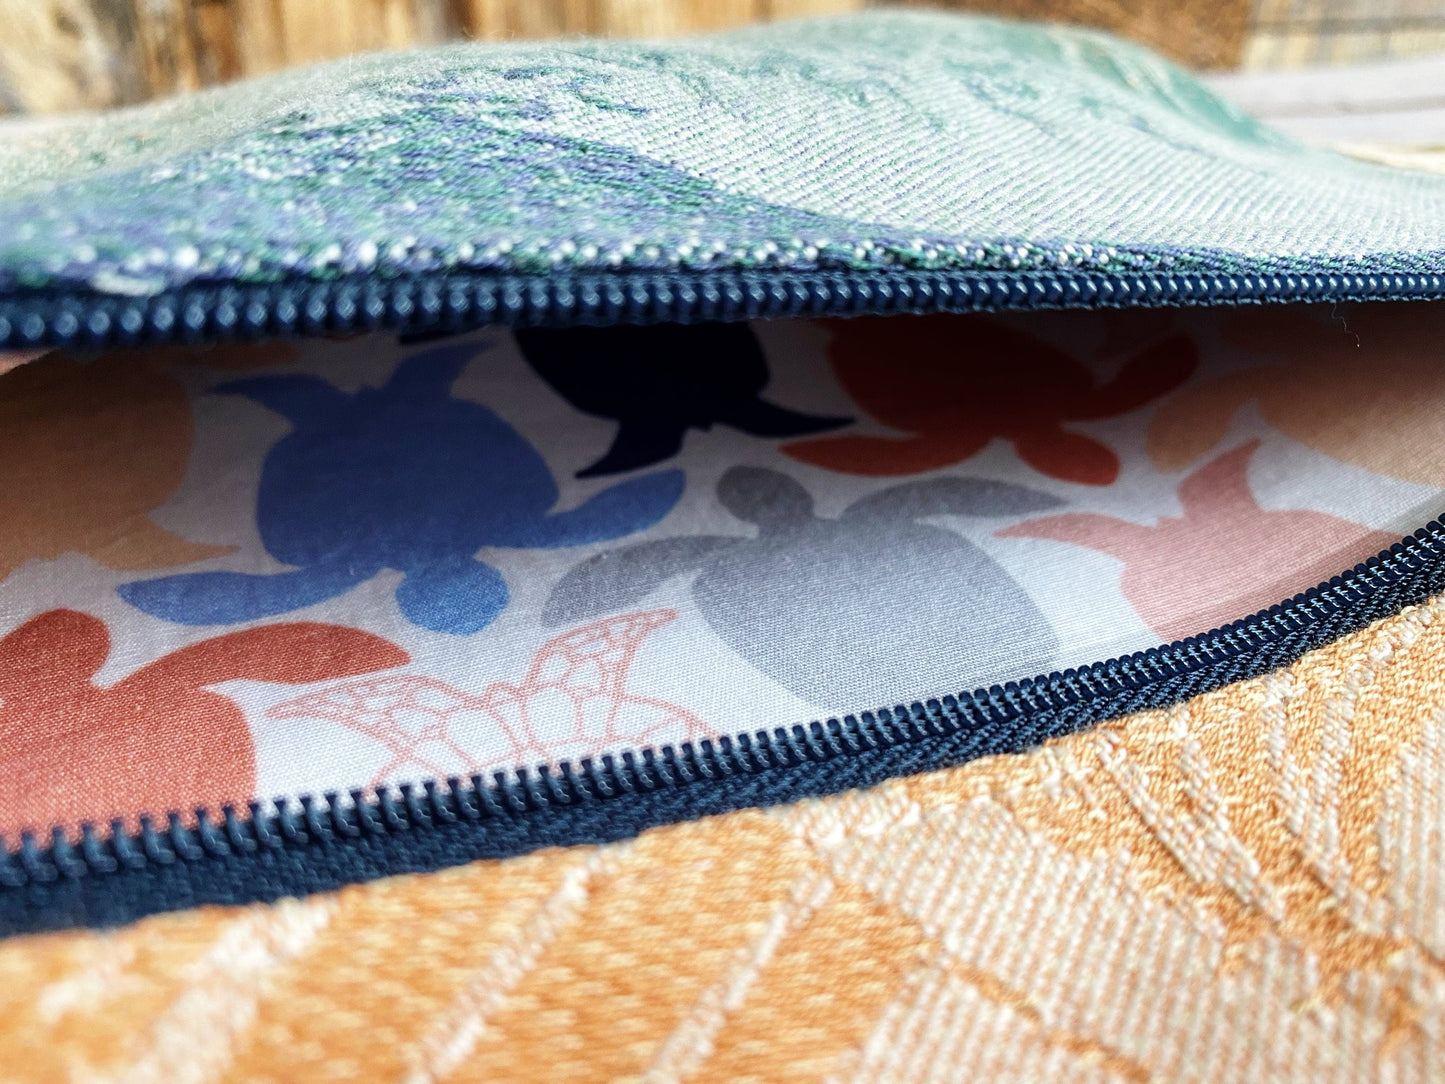 Okinami Hip or Cossbody Bag (aka Fanny pack!) with Custom Adjustable Waistband